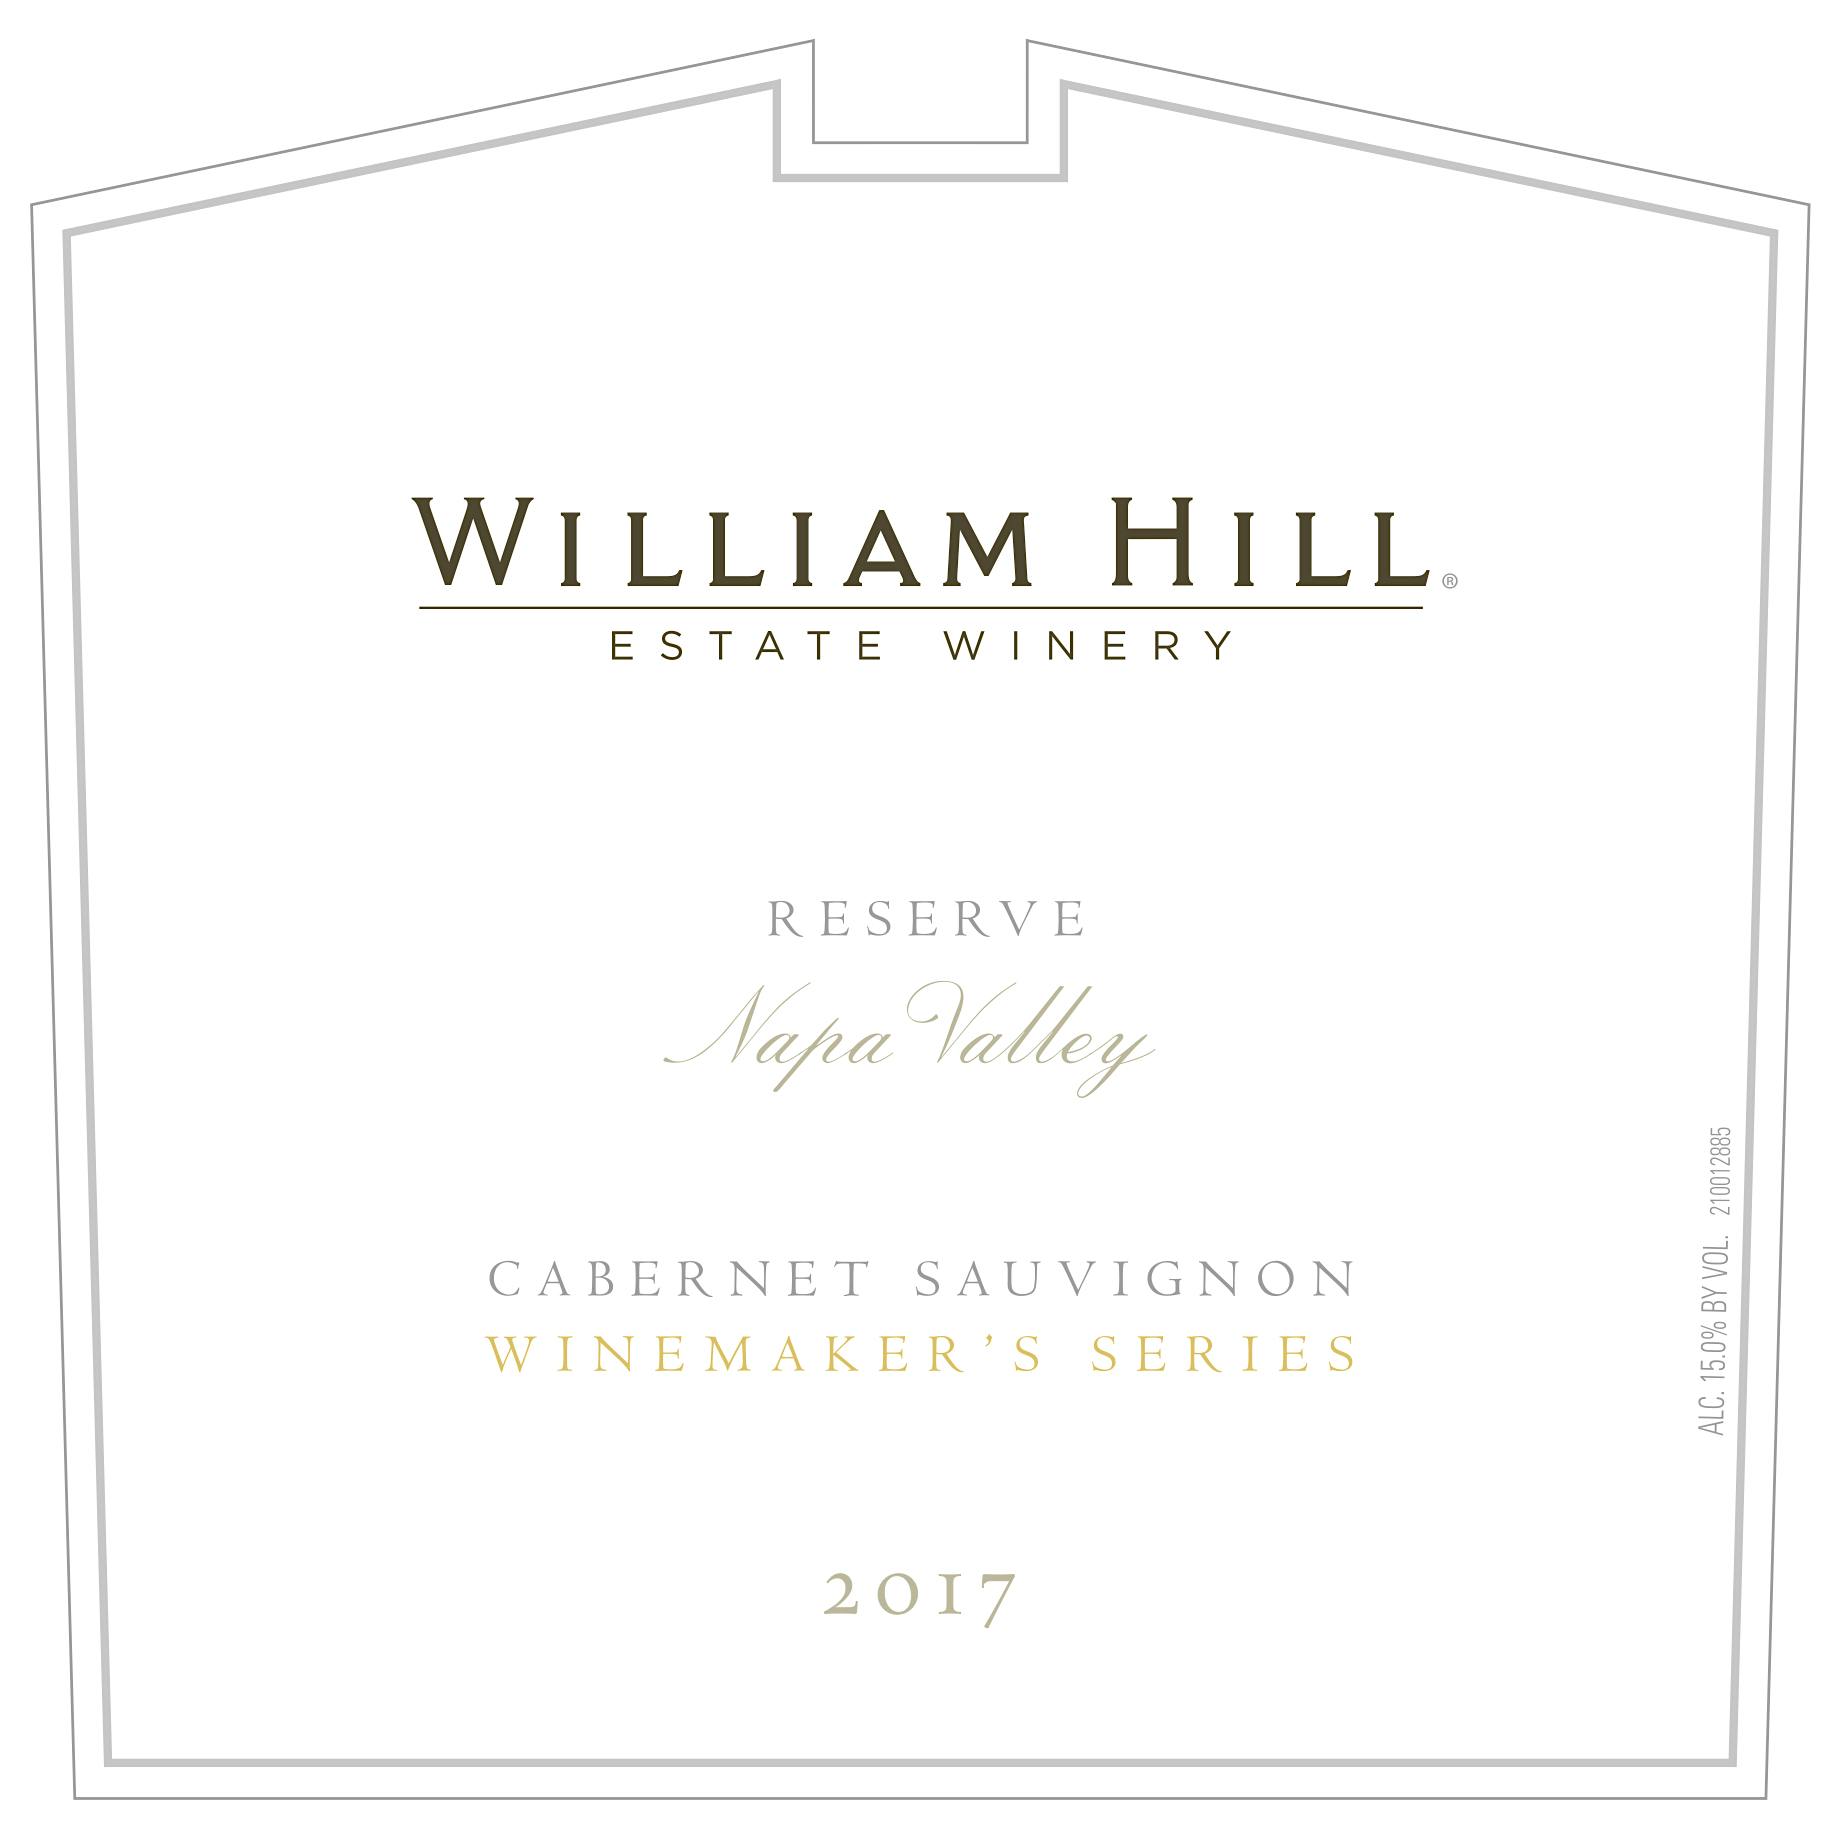 Label for William Hill